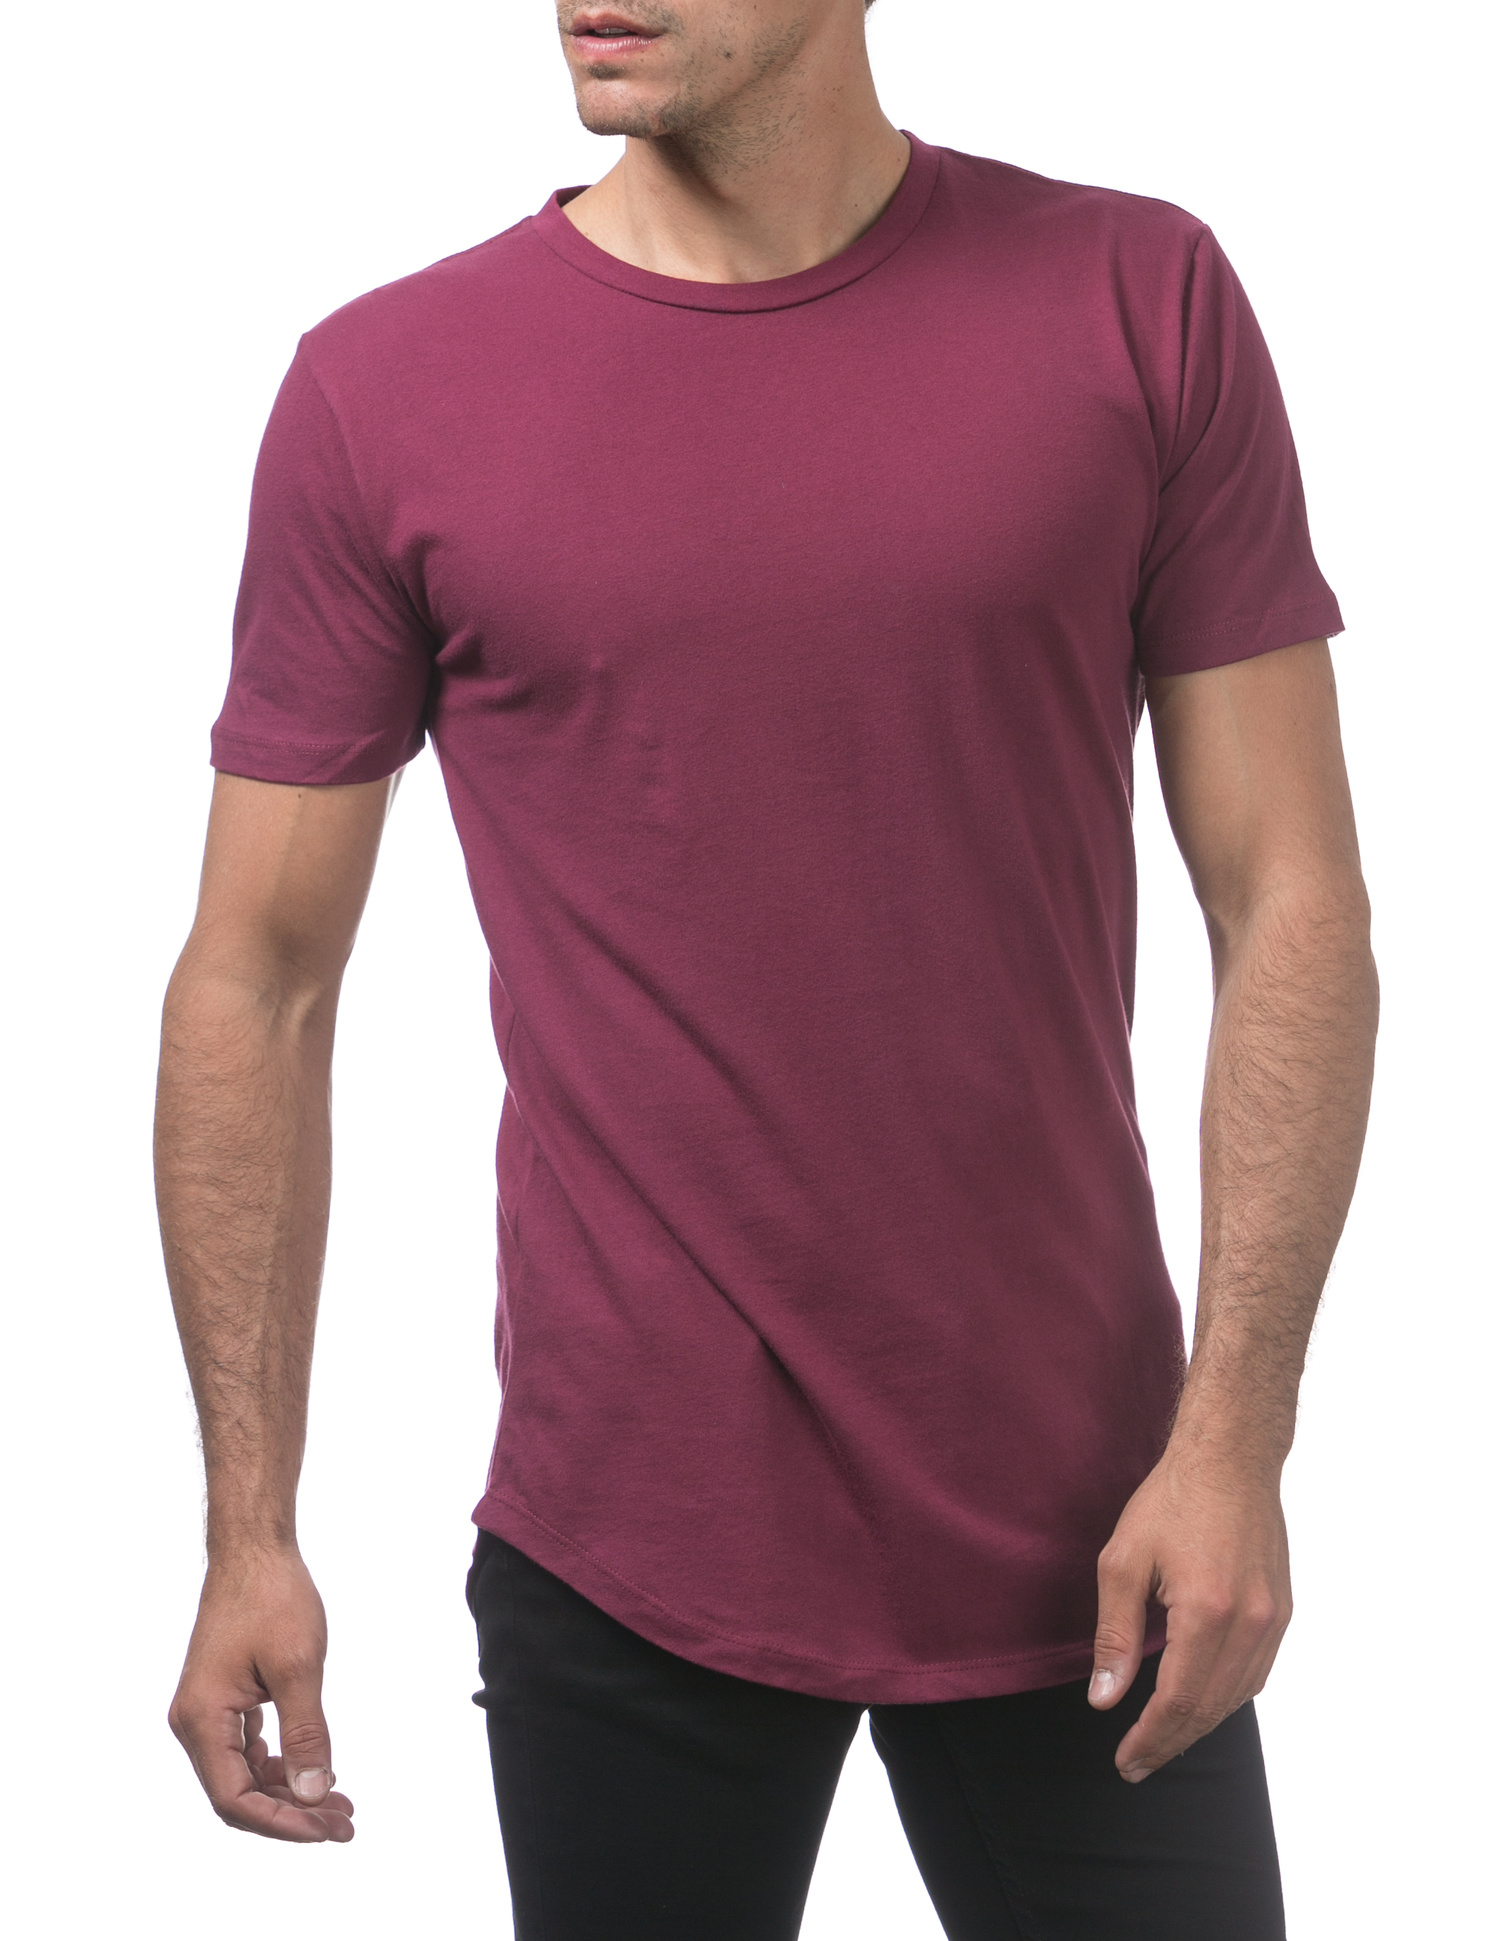 108 MAROON Longline Curved Hem Short Sleeve T-Shirt - Lightweight